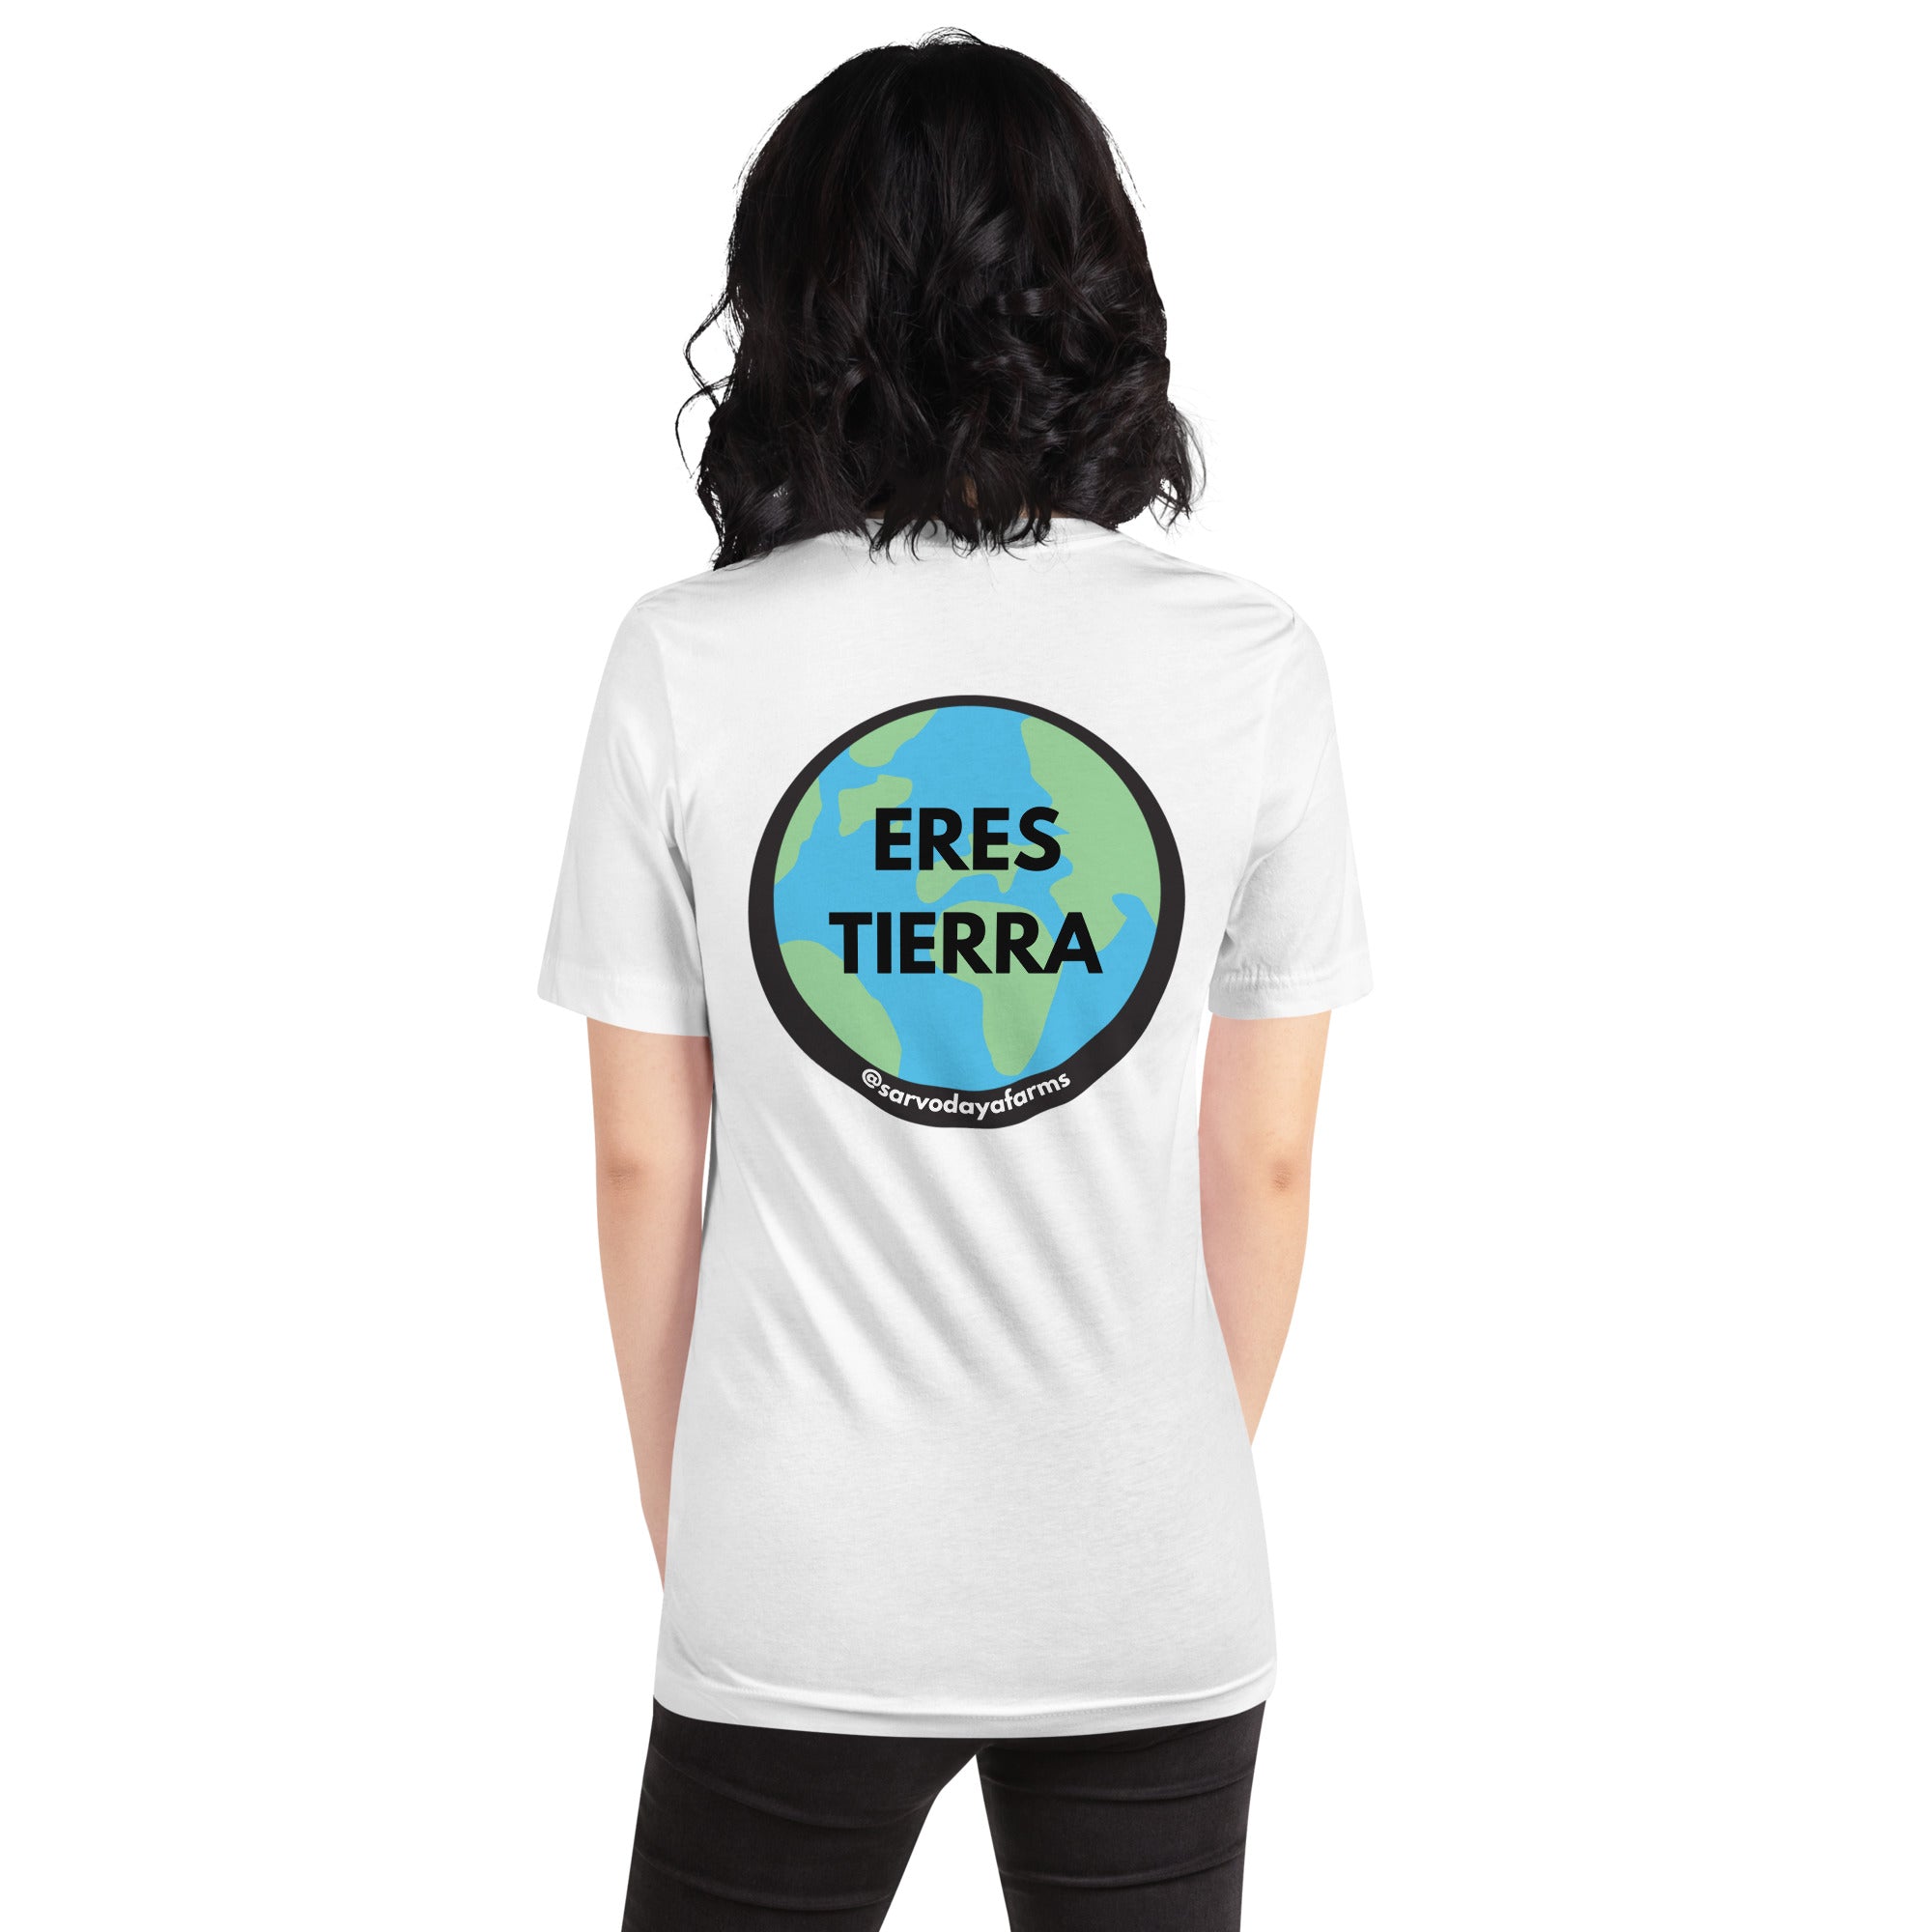 Eres Tierra T-shirt